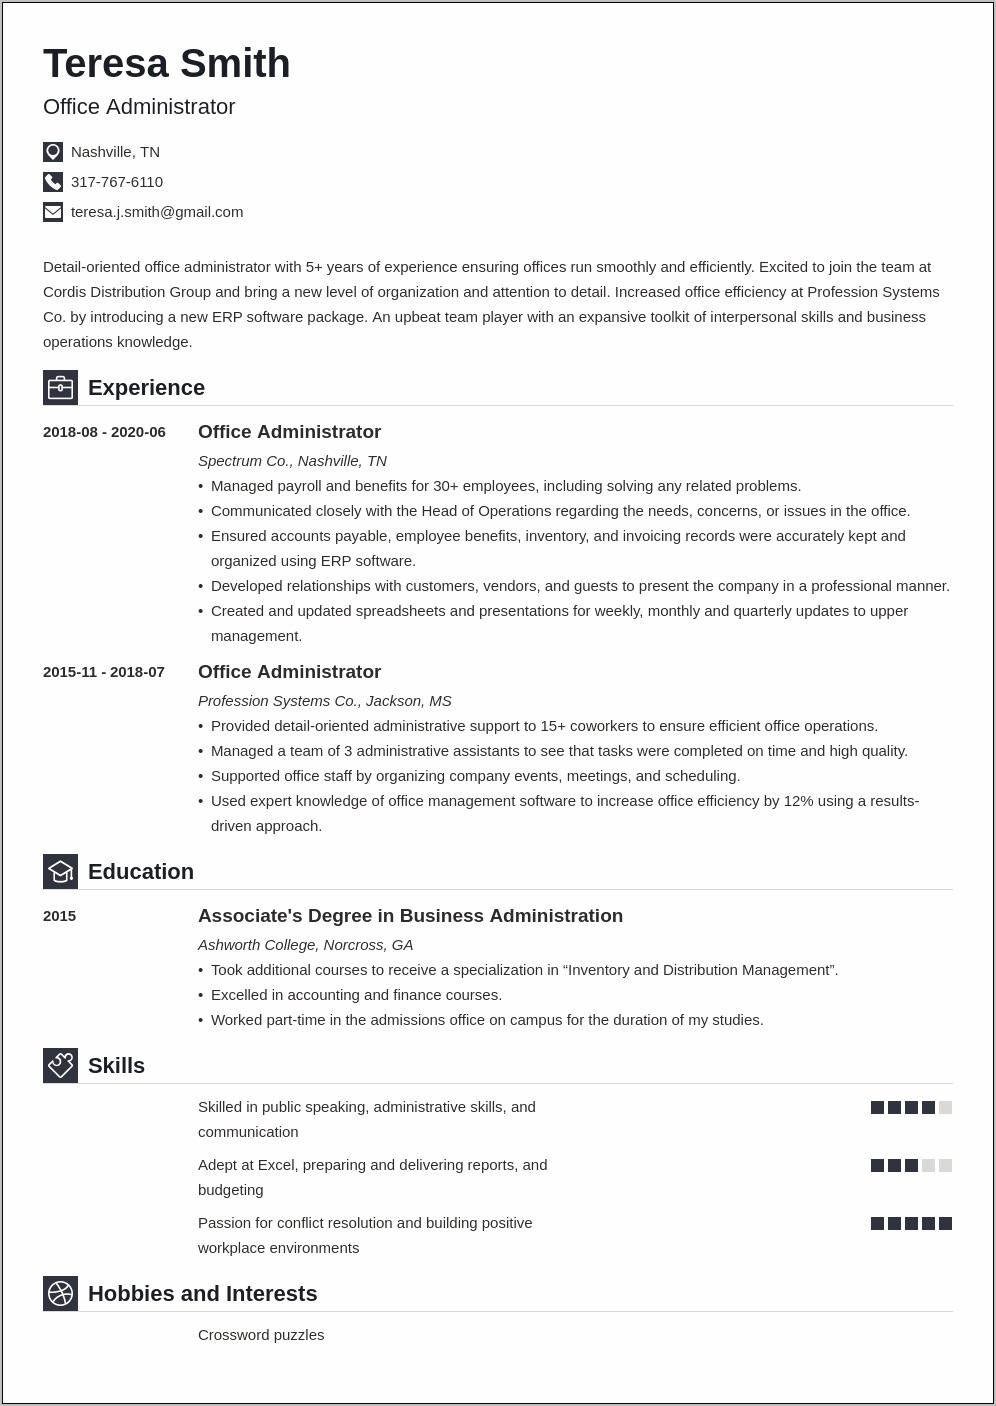 Resume Profile Summary For Office Coordinator